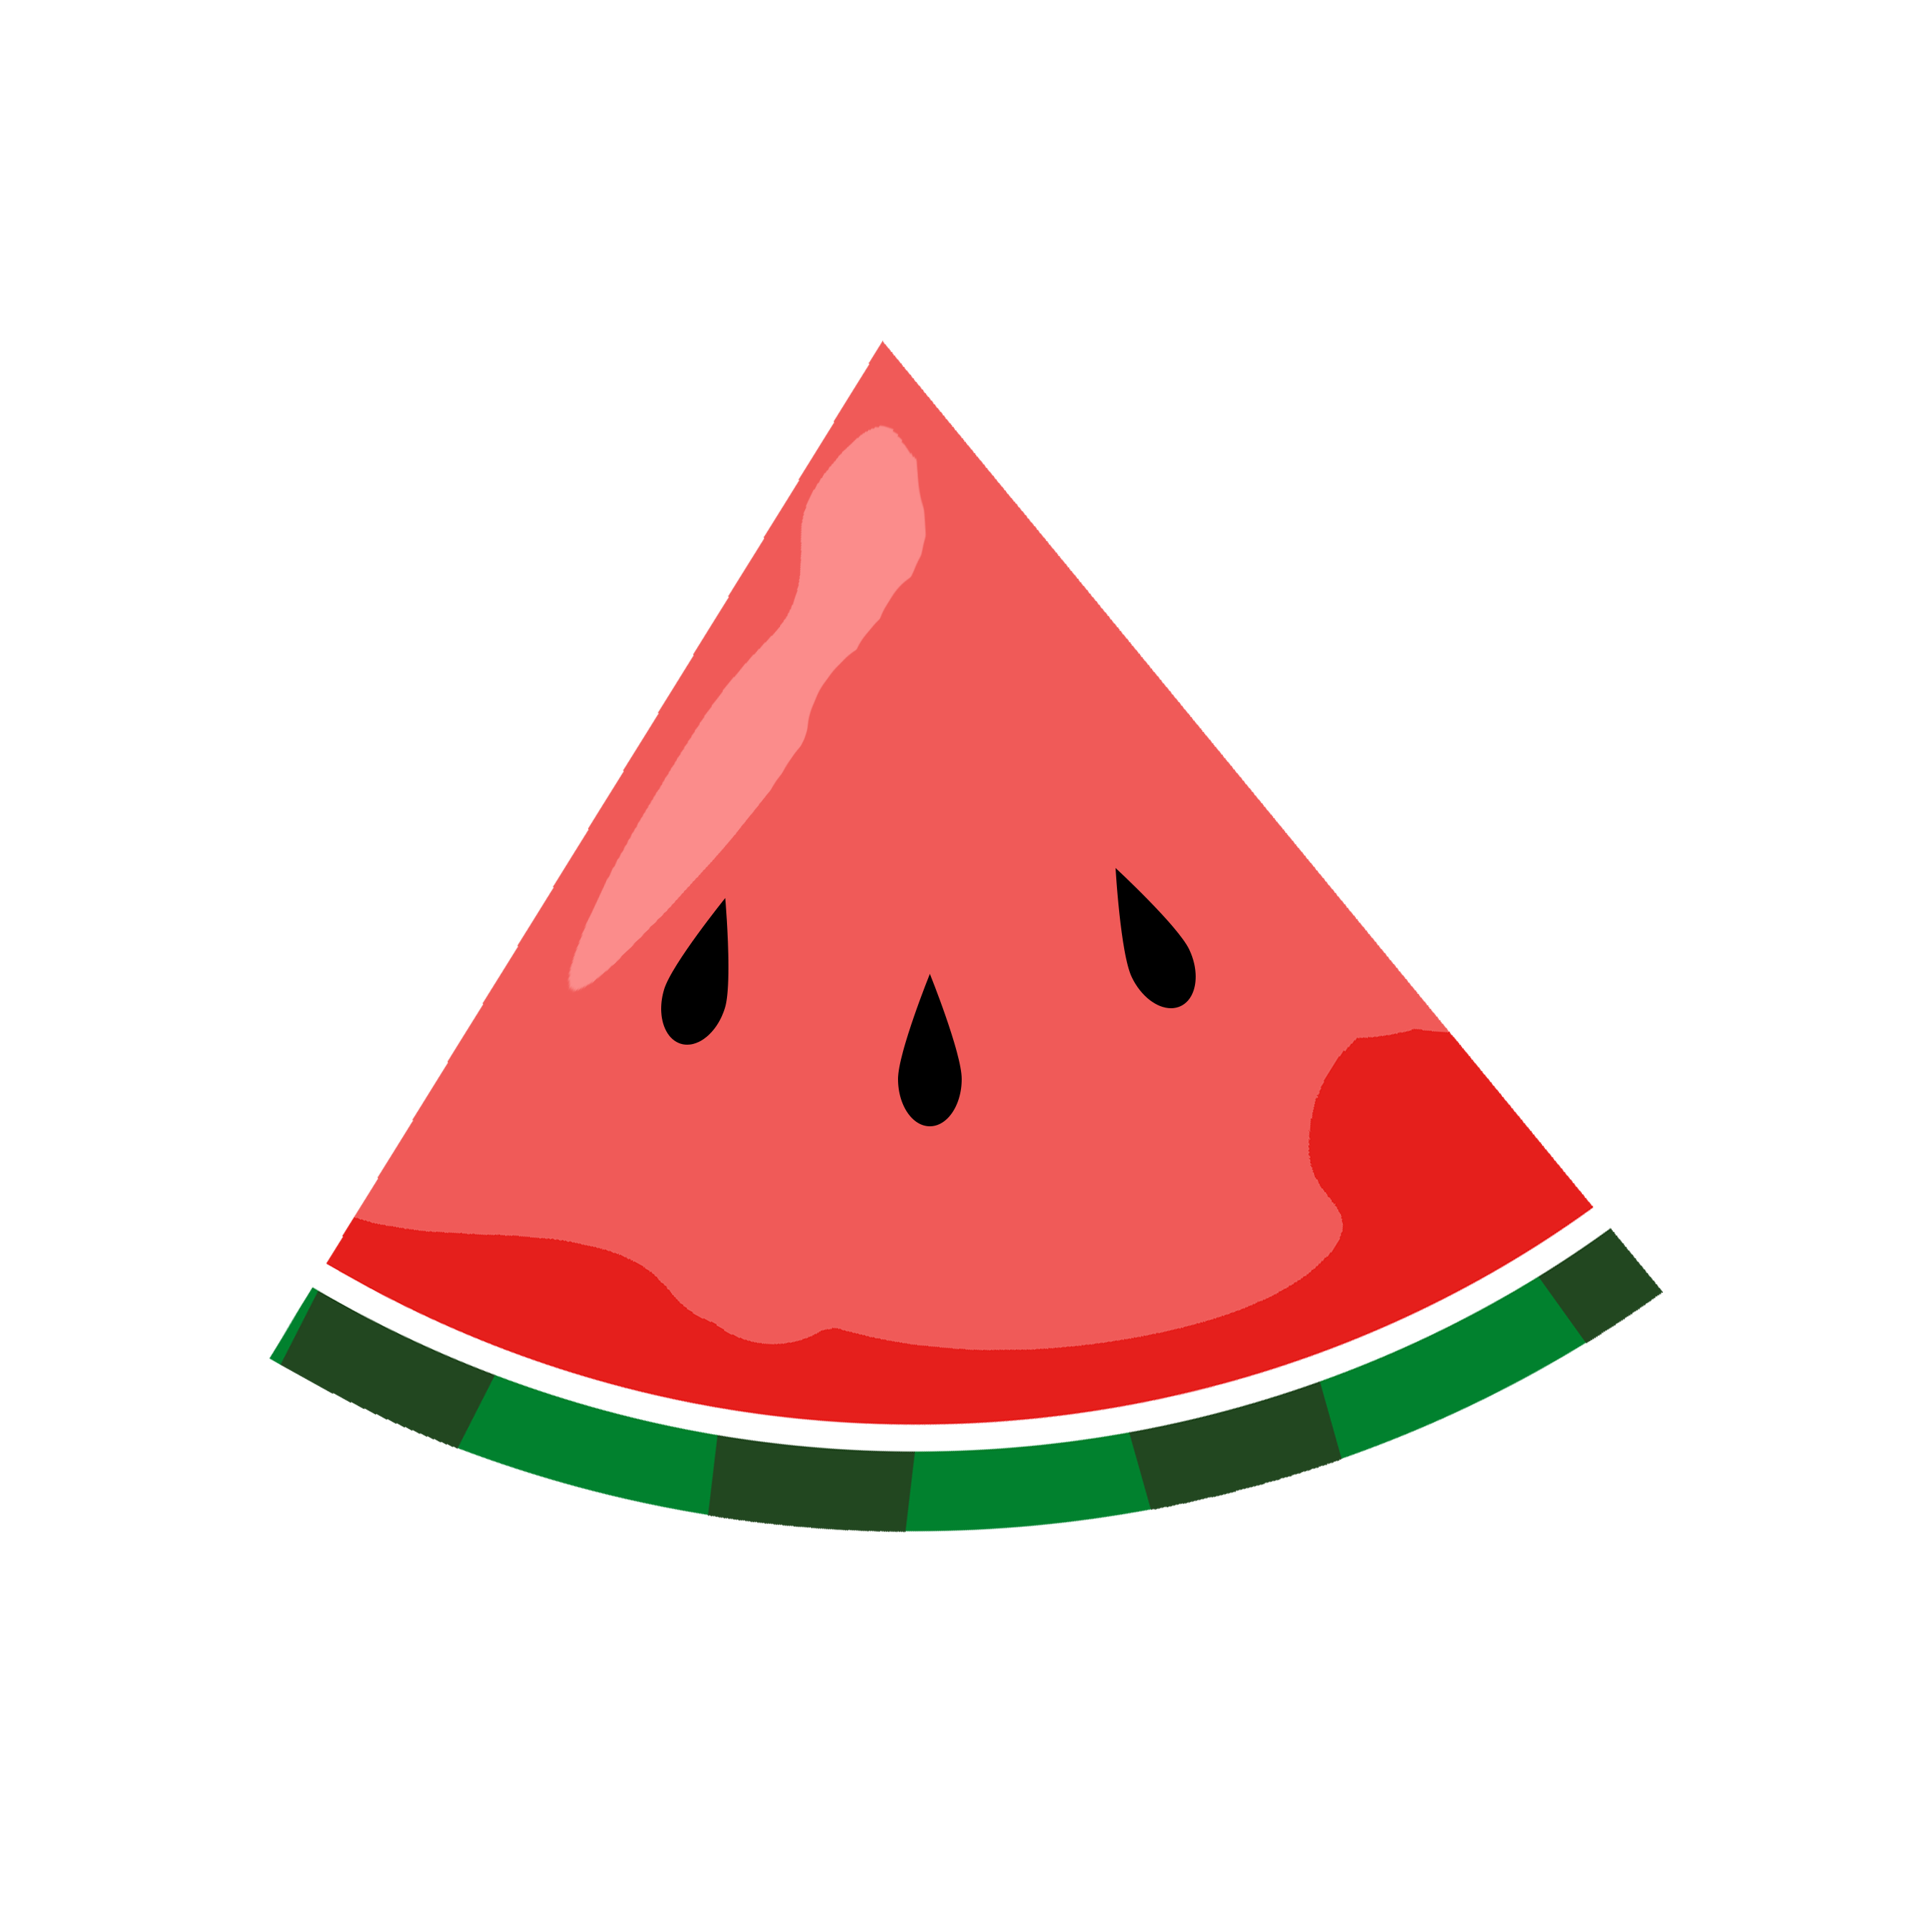 Watermelon clipart small watermelon.  collection of slice